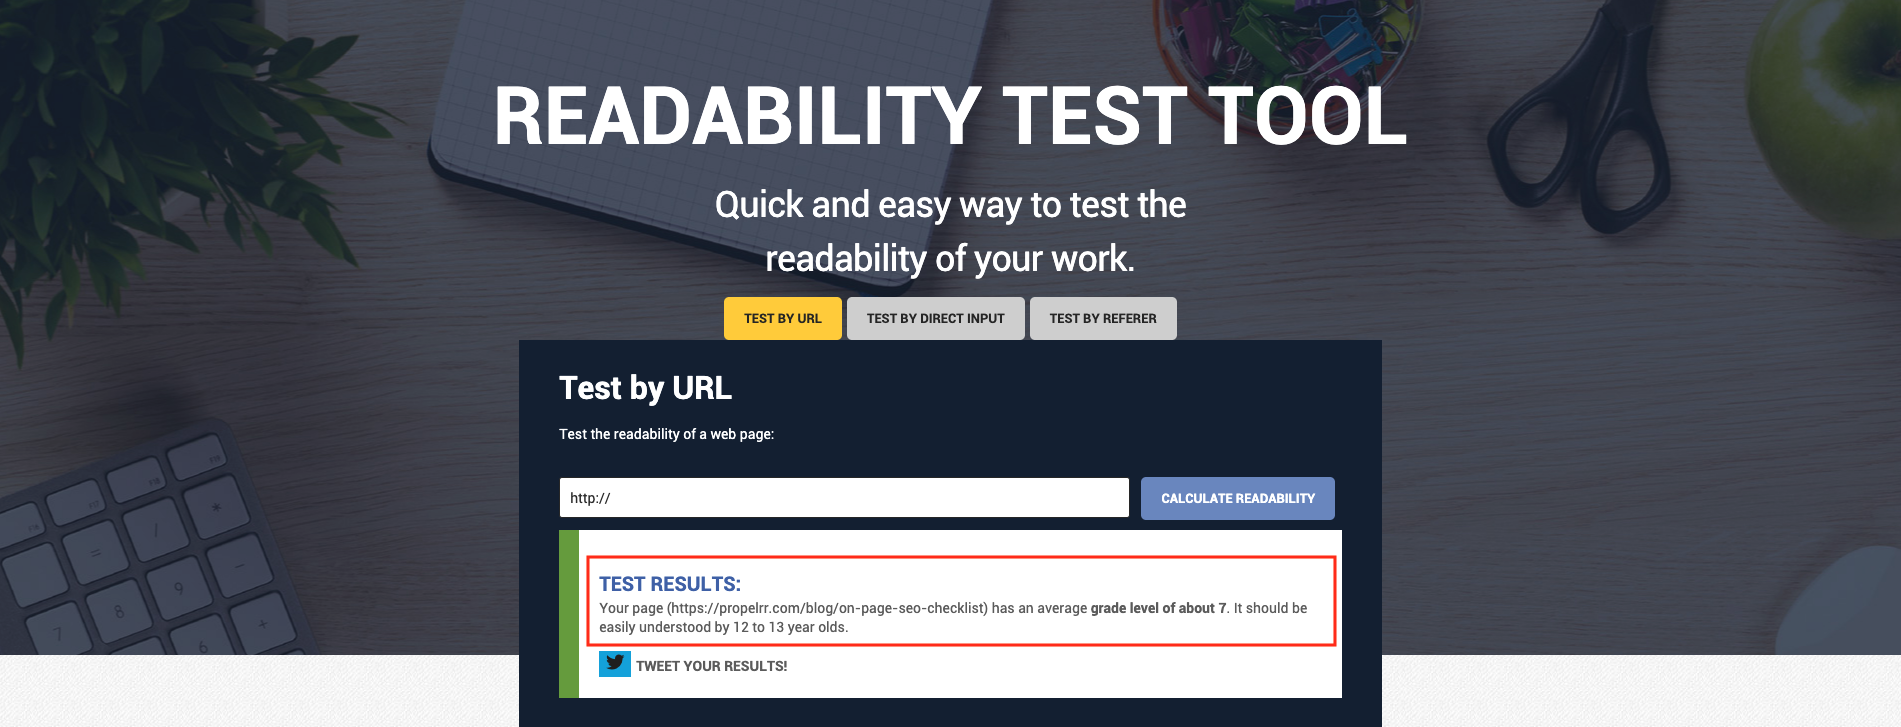 Readability test tool sample